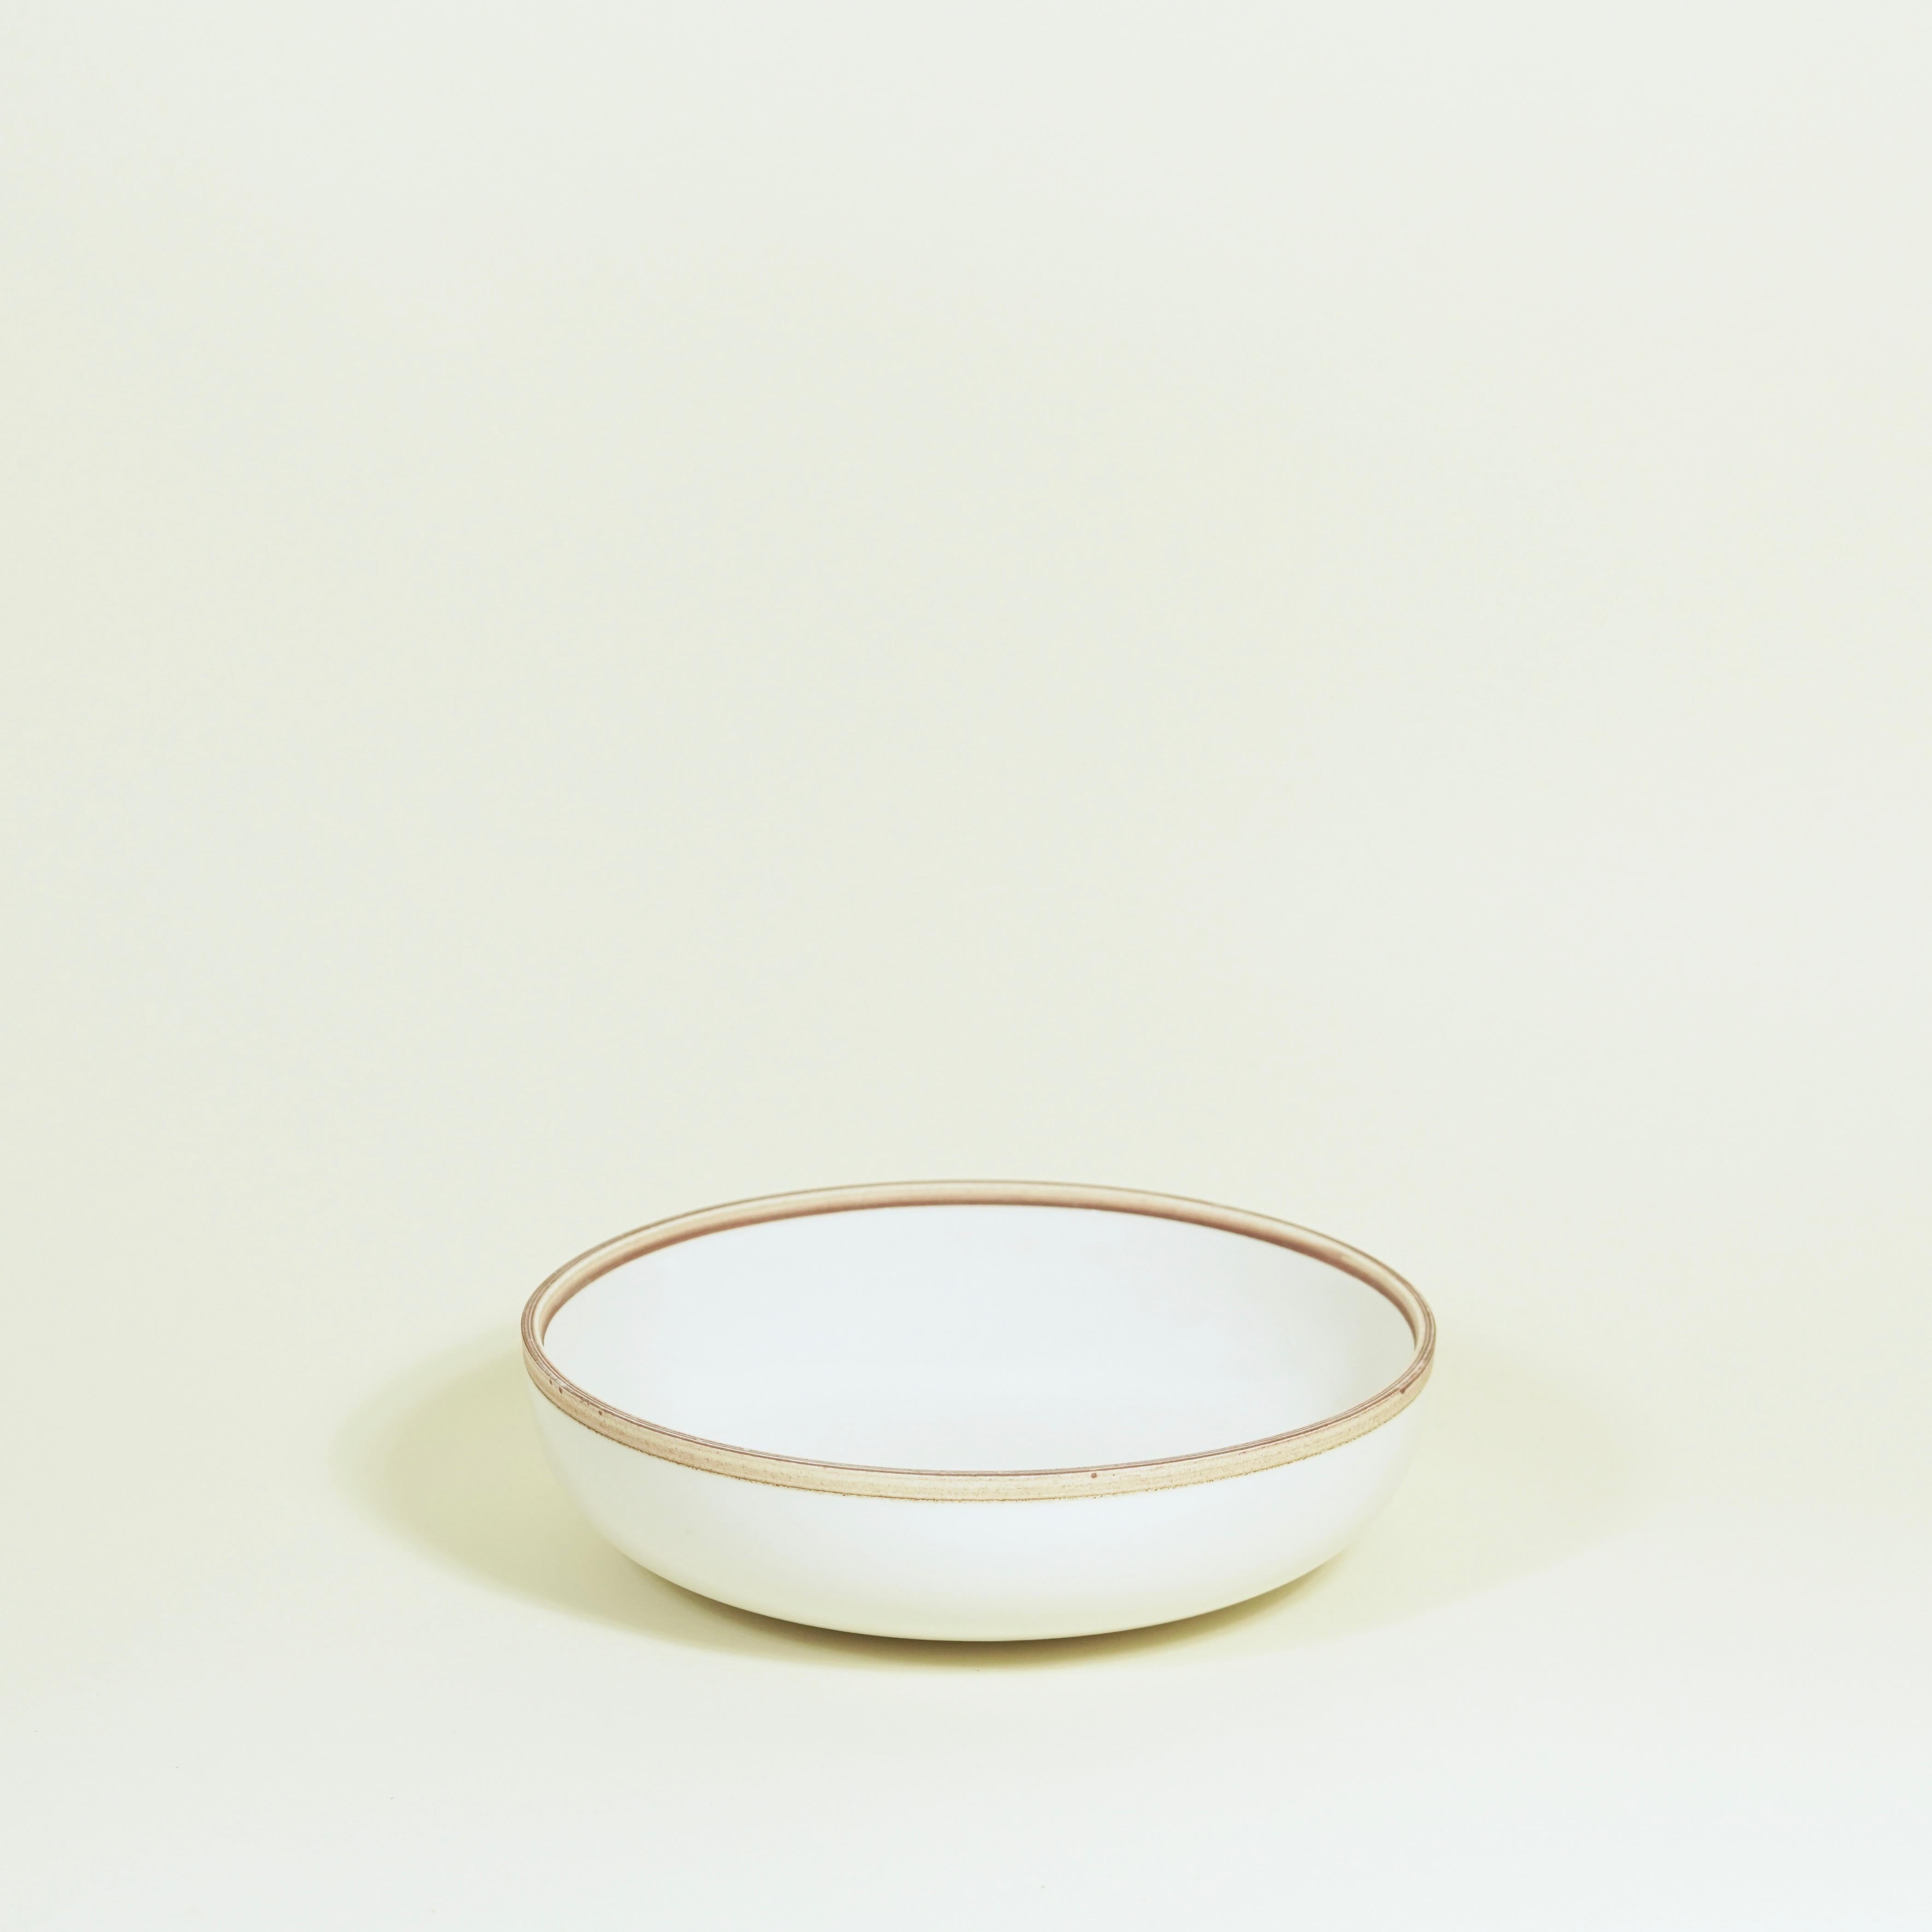 Chinese Medium Ivory Glazed Porcelain Hermit Bowl with Rustic Rim